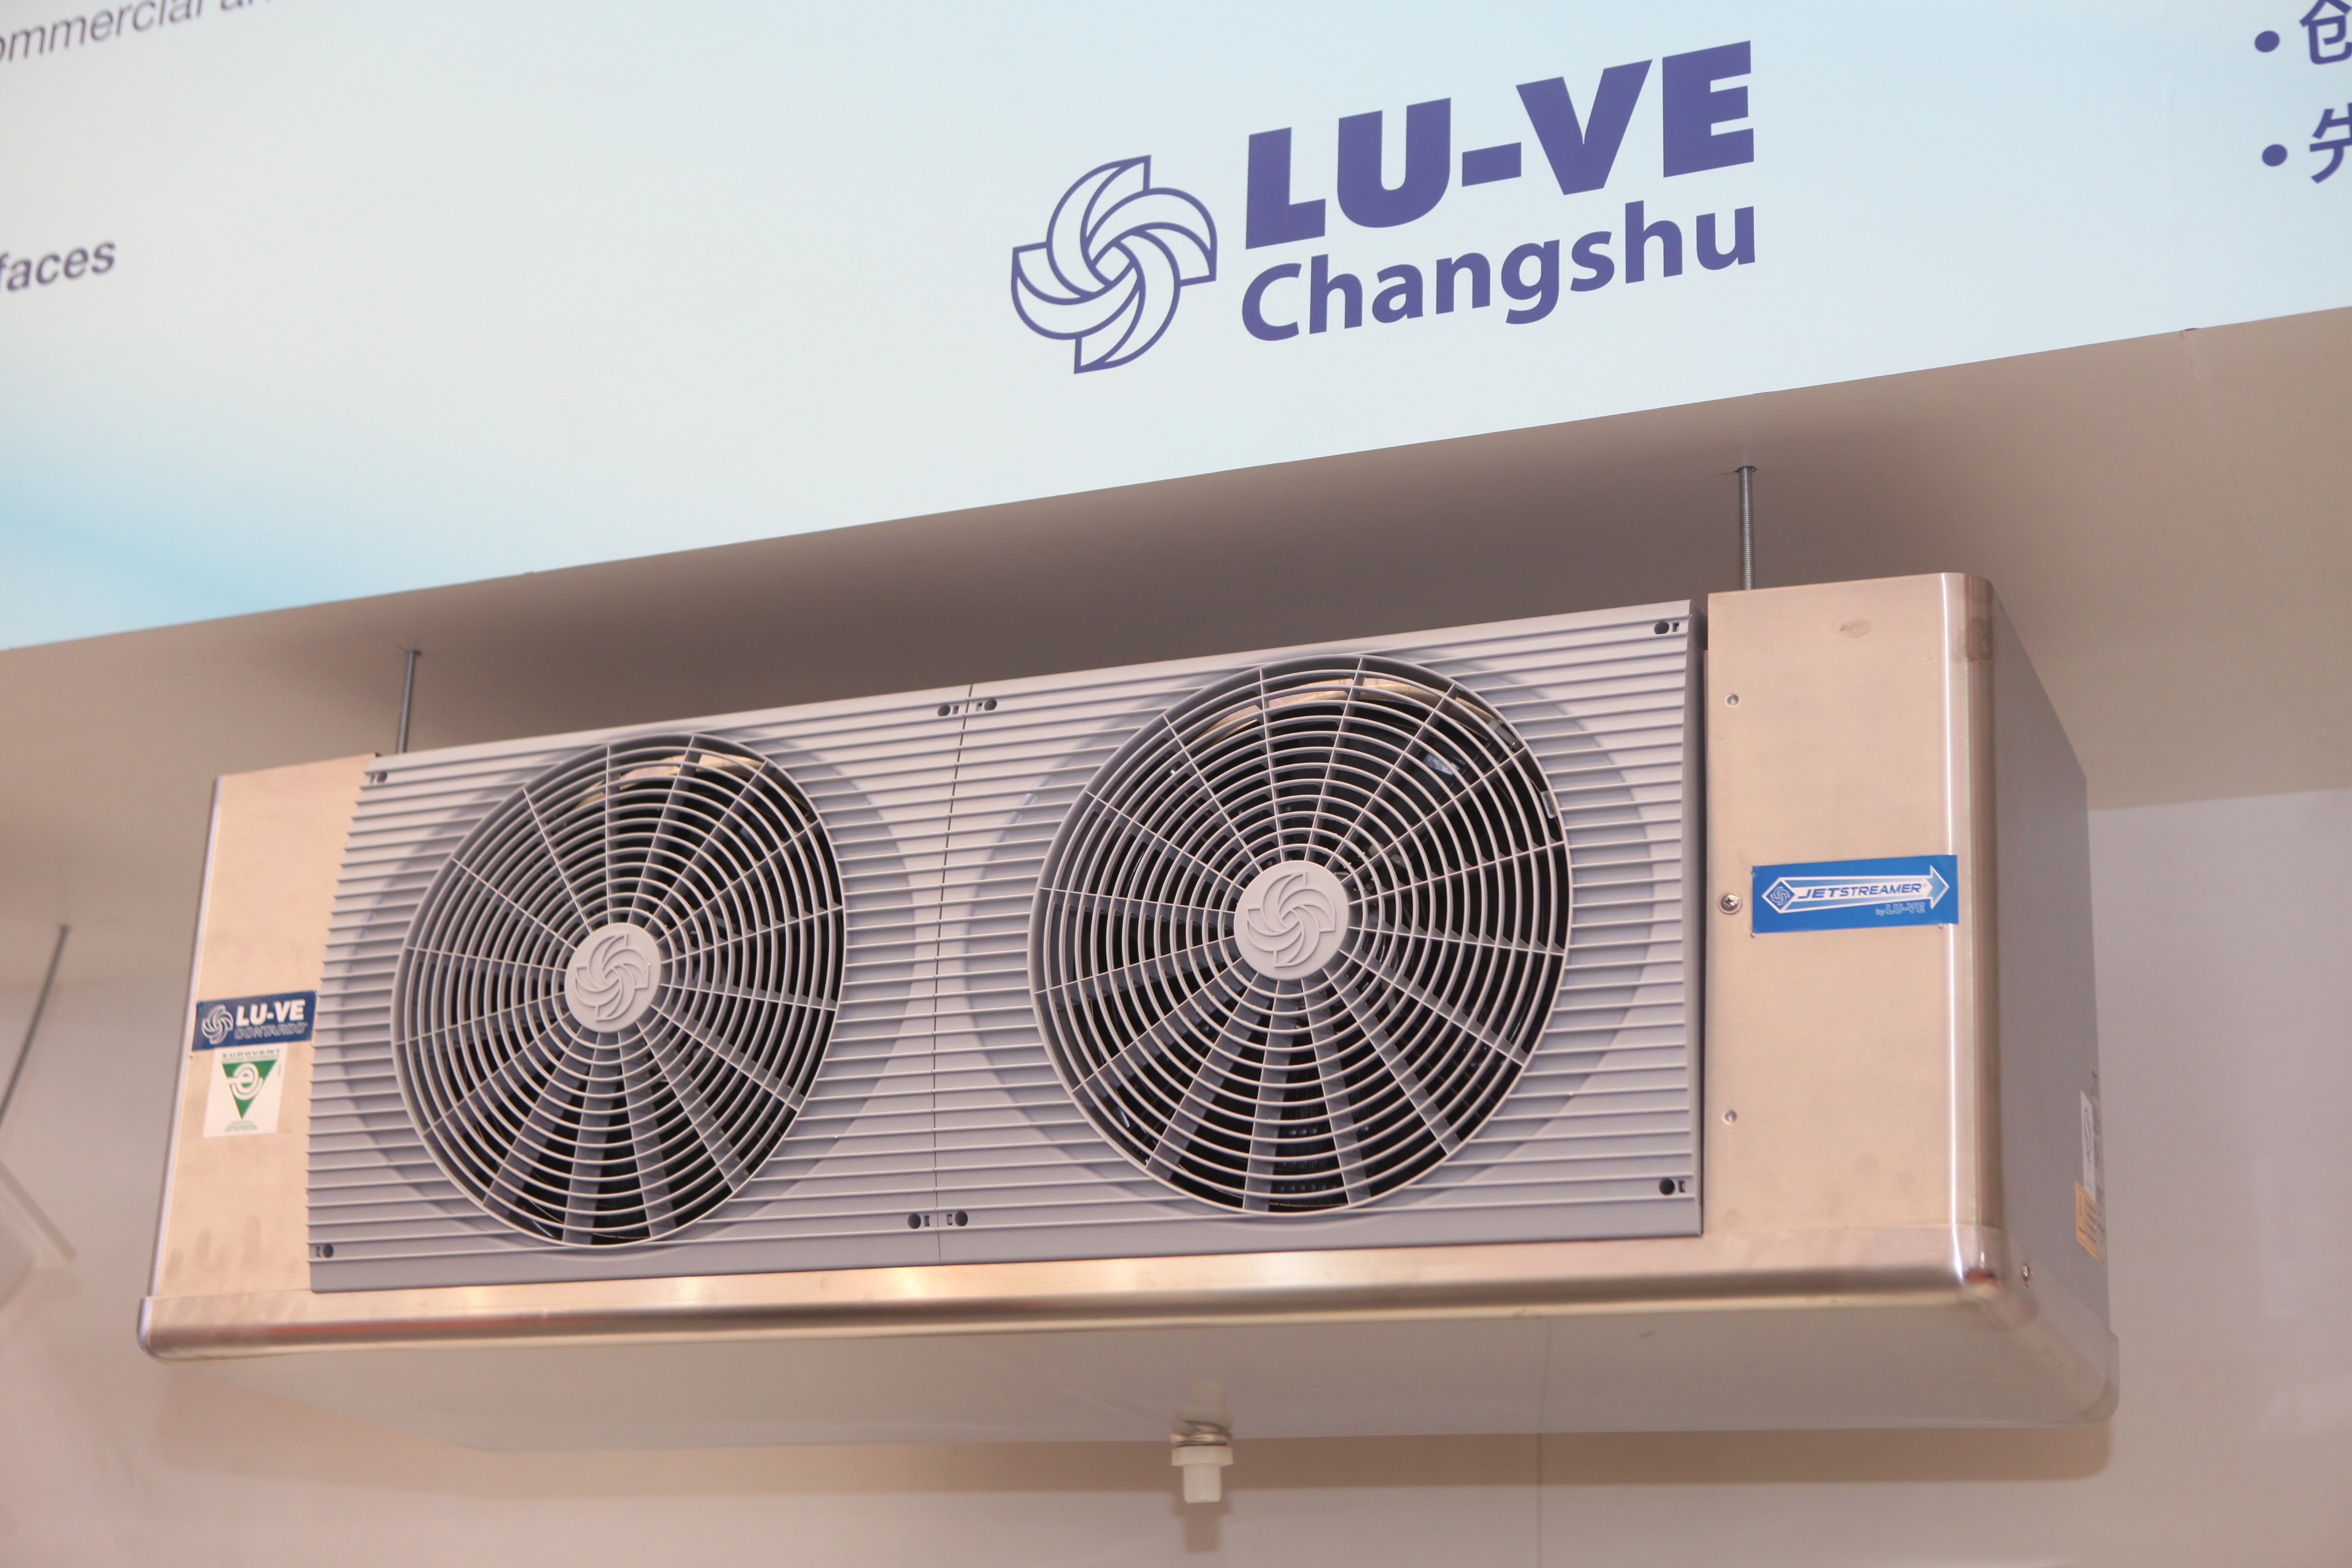 China Refrigeration Exhibition 2013 - Shanghai